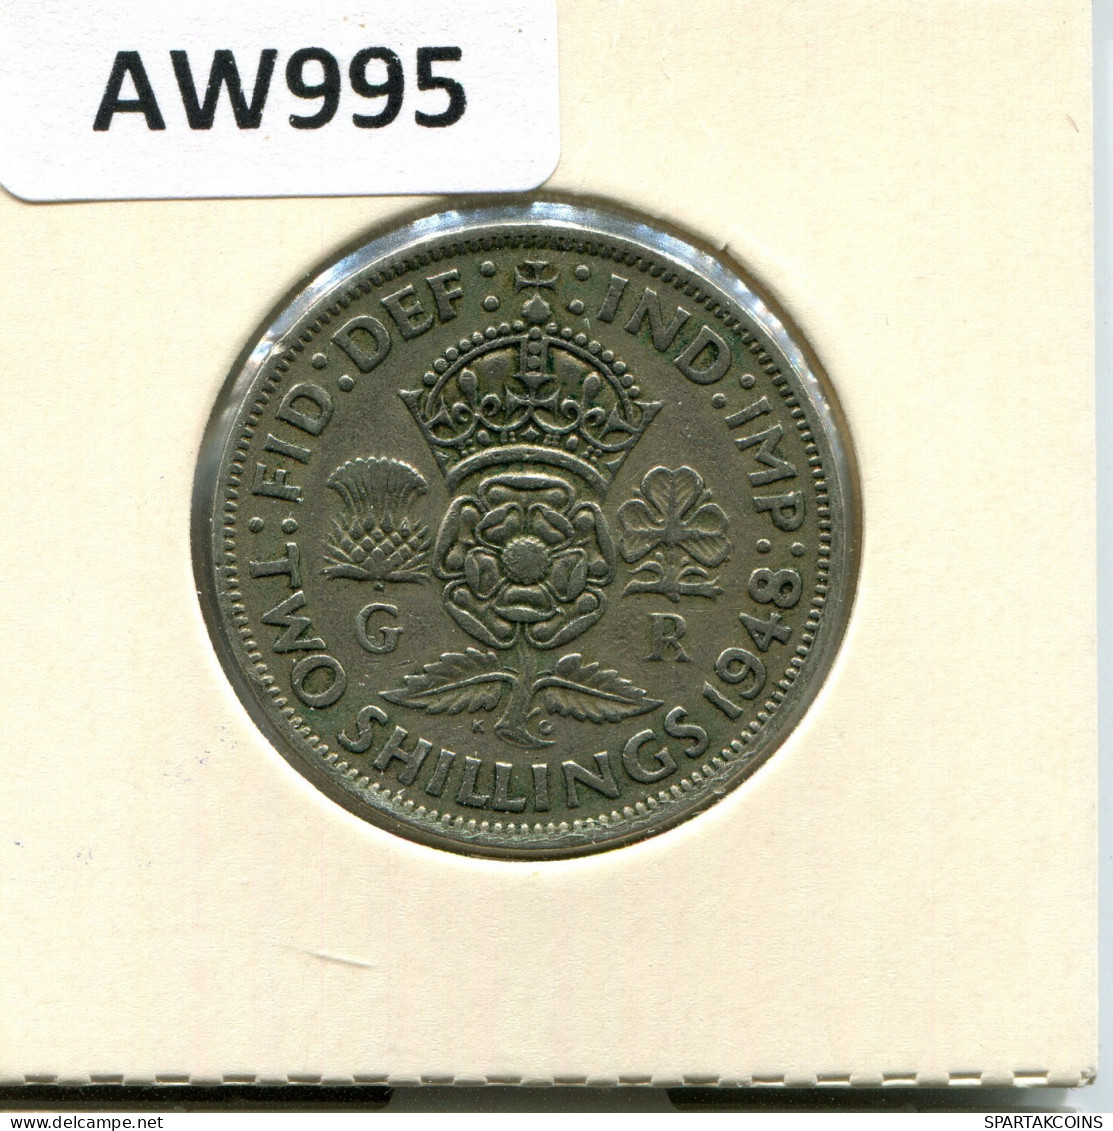 2 SHILLING 1948 UK GBAN BRETAÑA GREAT BRITAIN Moneda #AW995.E.A - J. 1 Florin / 2 Shillings